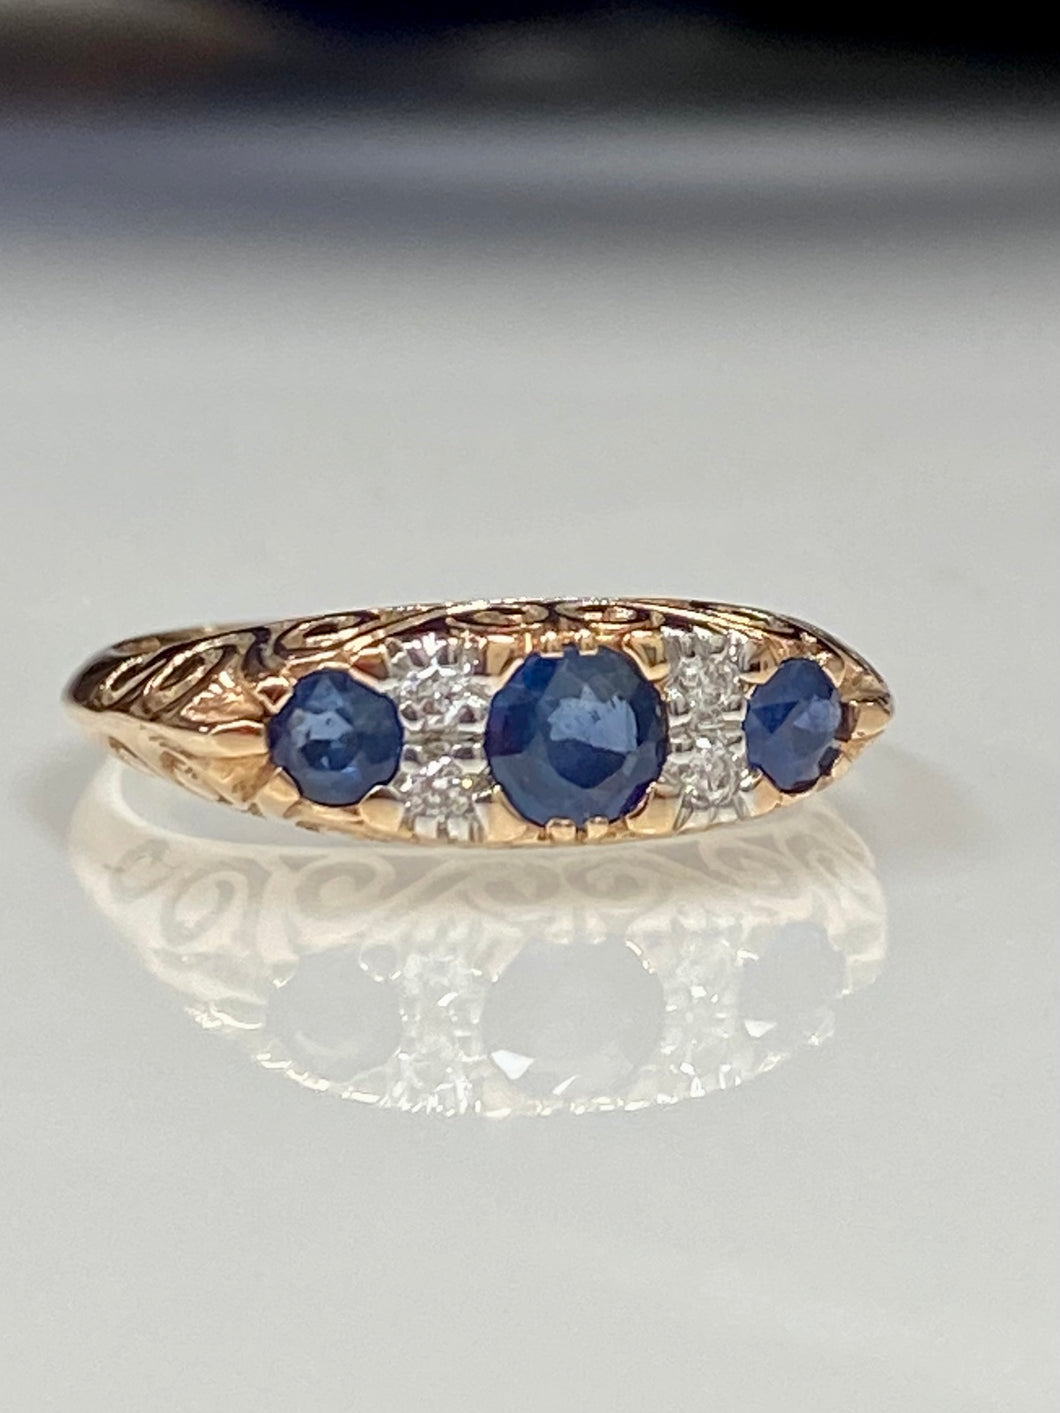 9ct Rose Gold Sapphire London Bridge Style Ring